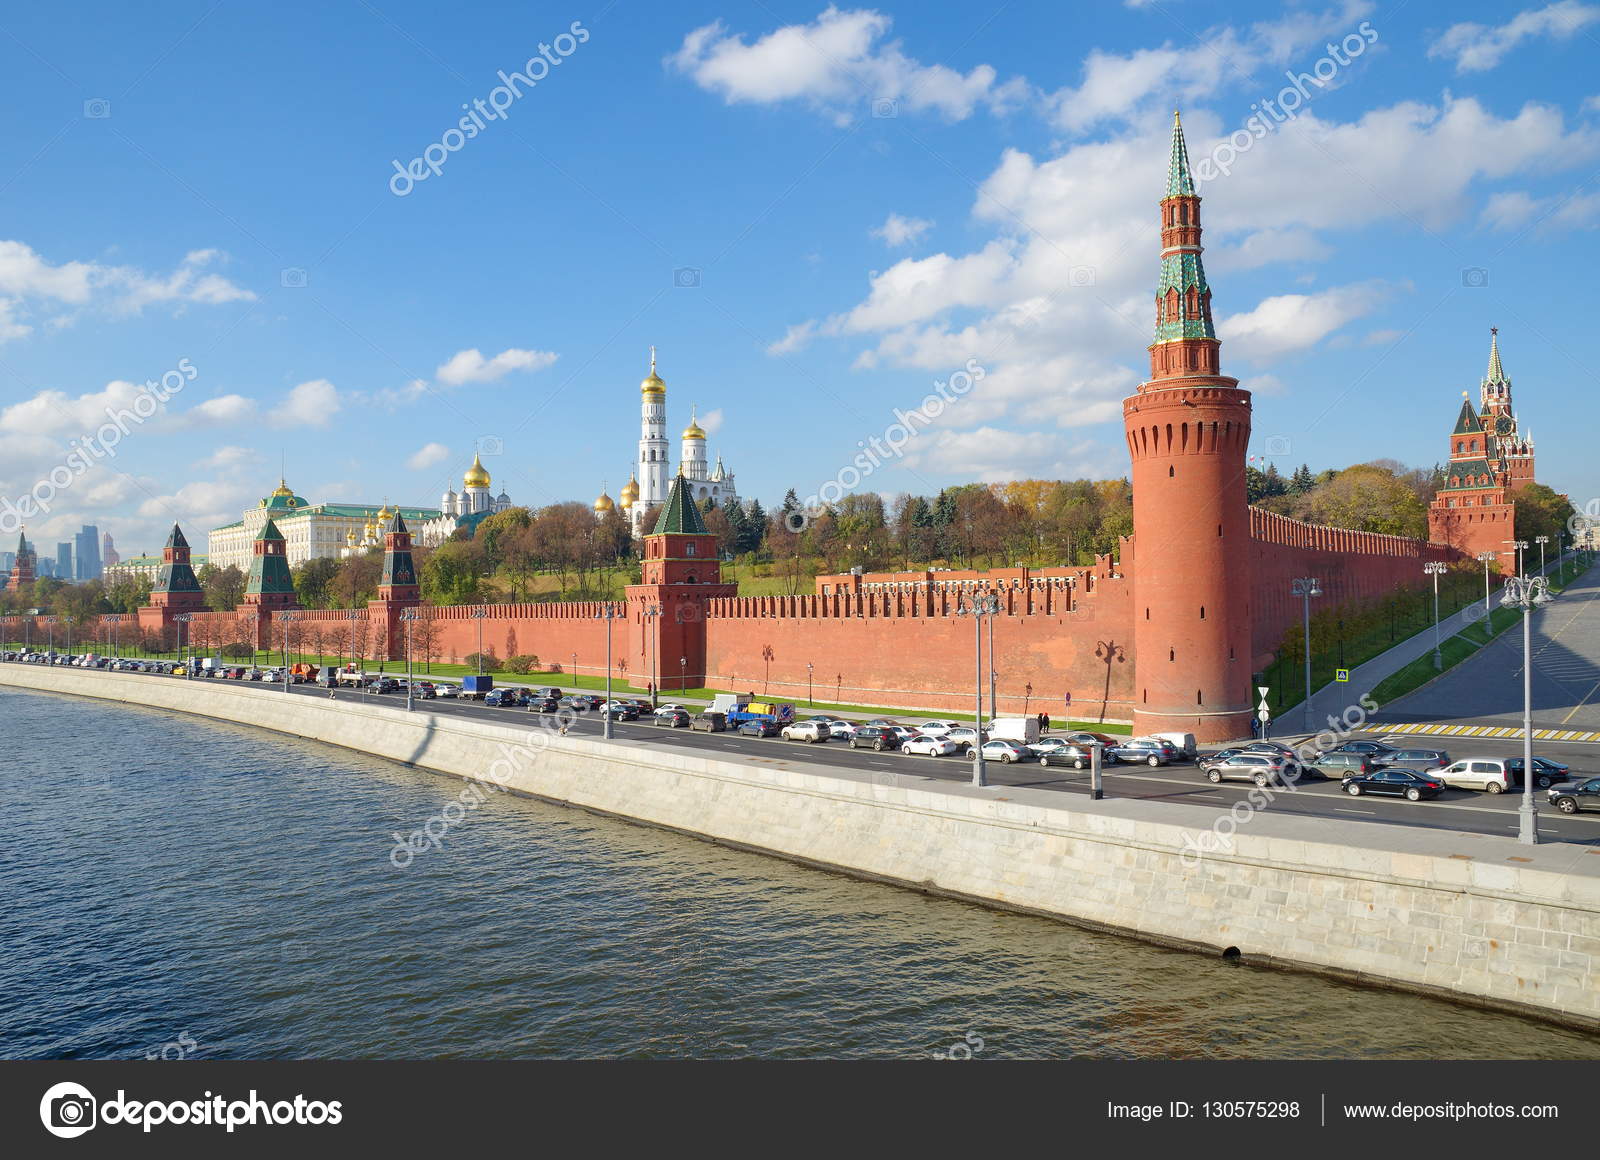 depositphotos_130575298-stock-photo-beautiful-view-of-moscow-kremlin.jpg